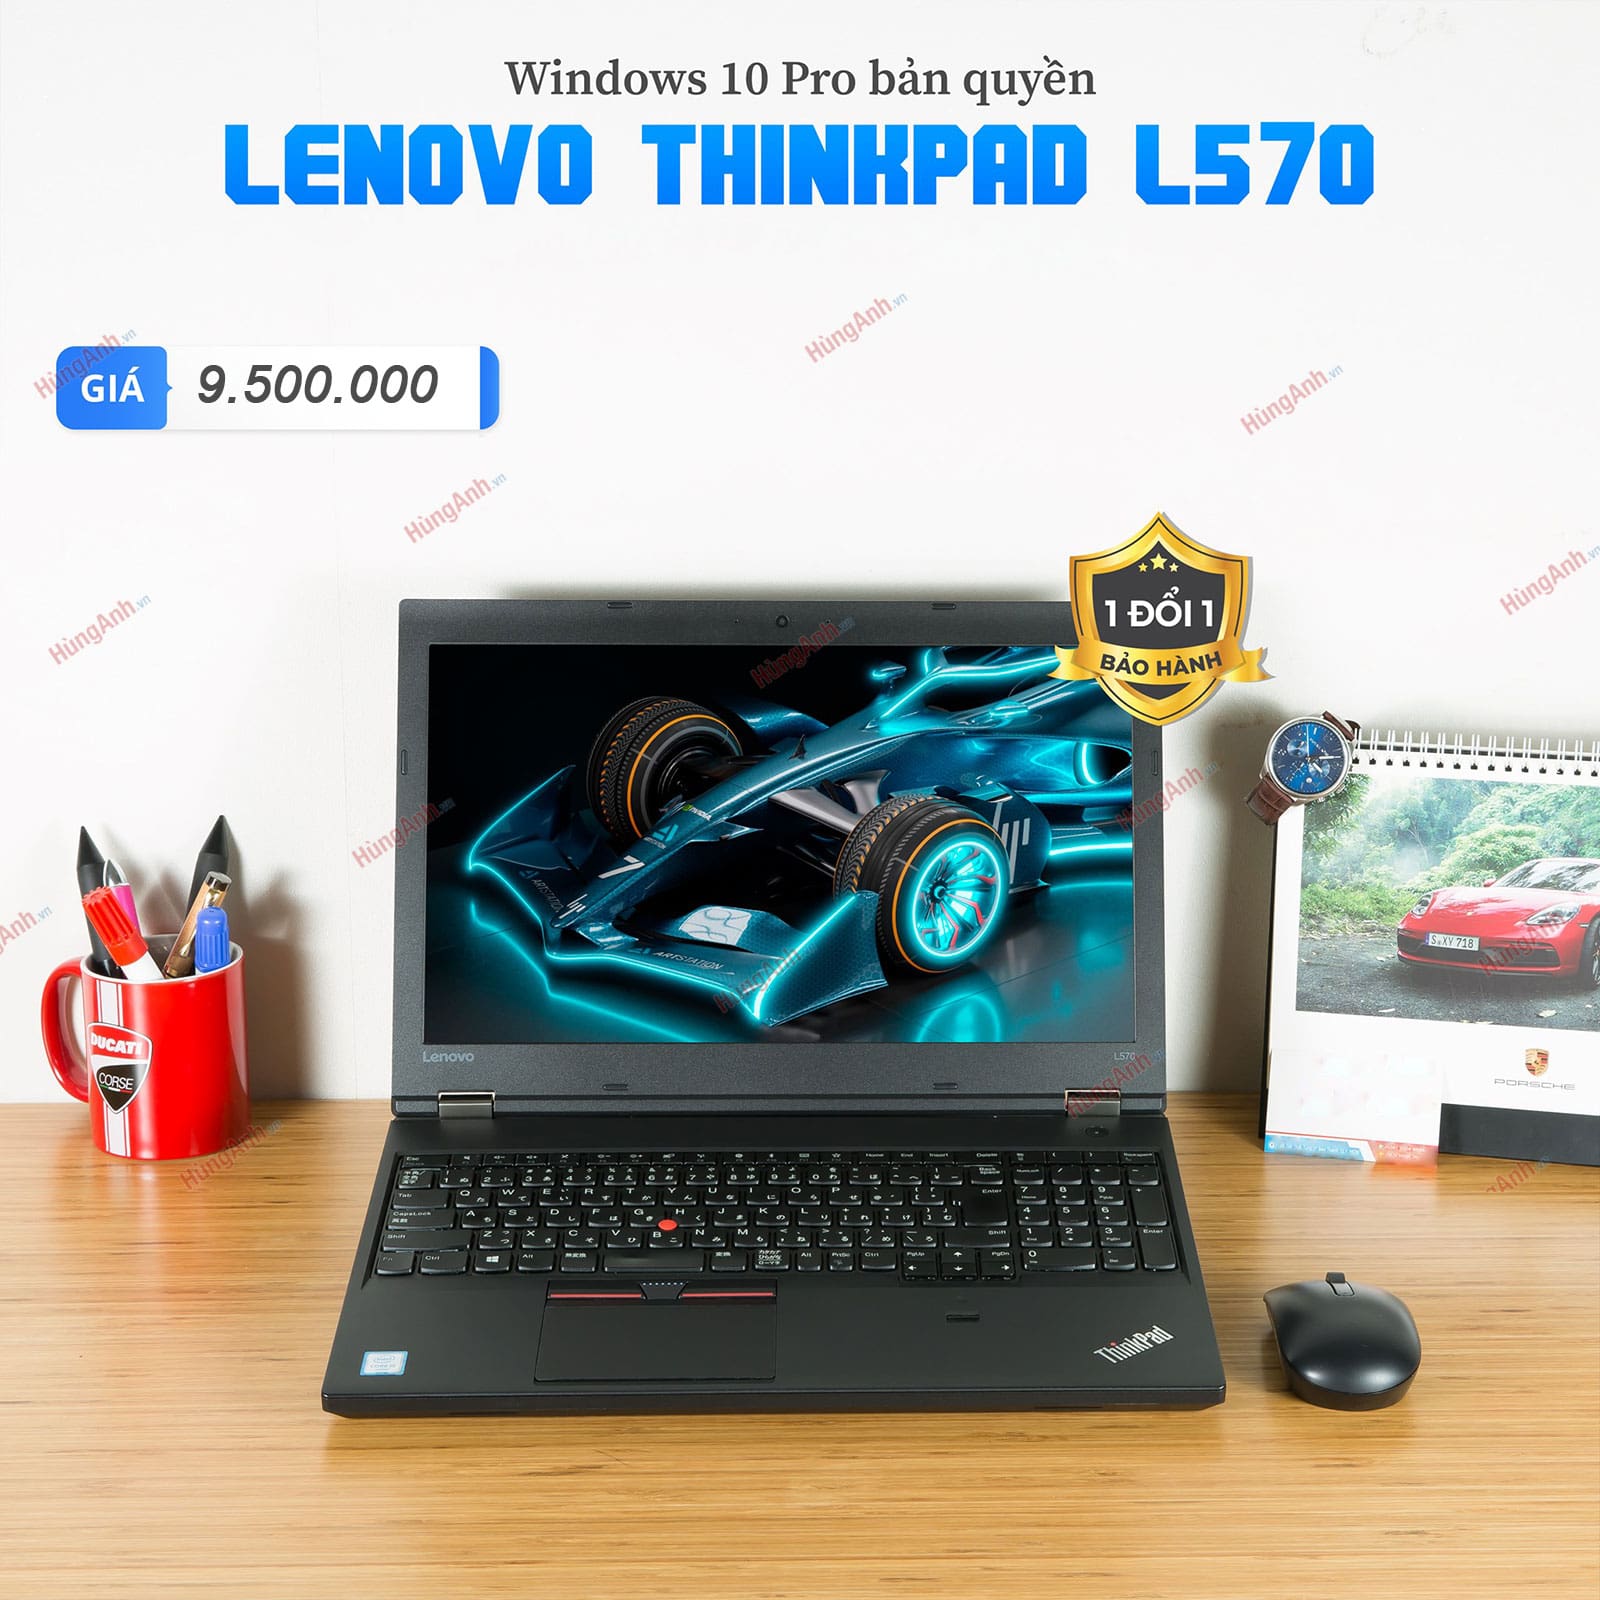 Giá bán Laptop Thinkpad L570 Core i5 7200U, 15.6 Inch Full HD IPS